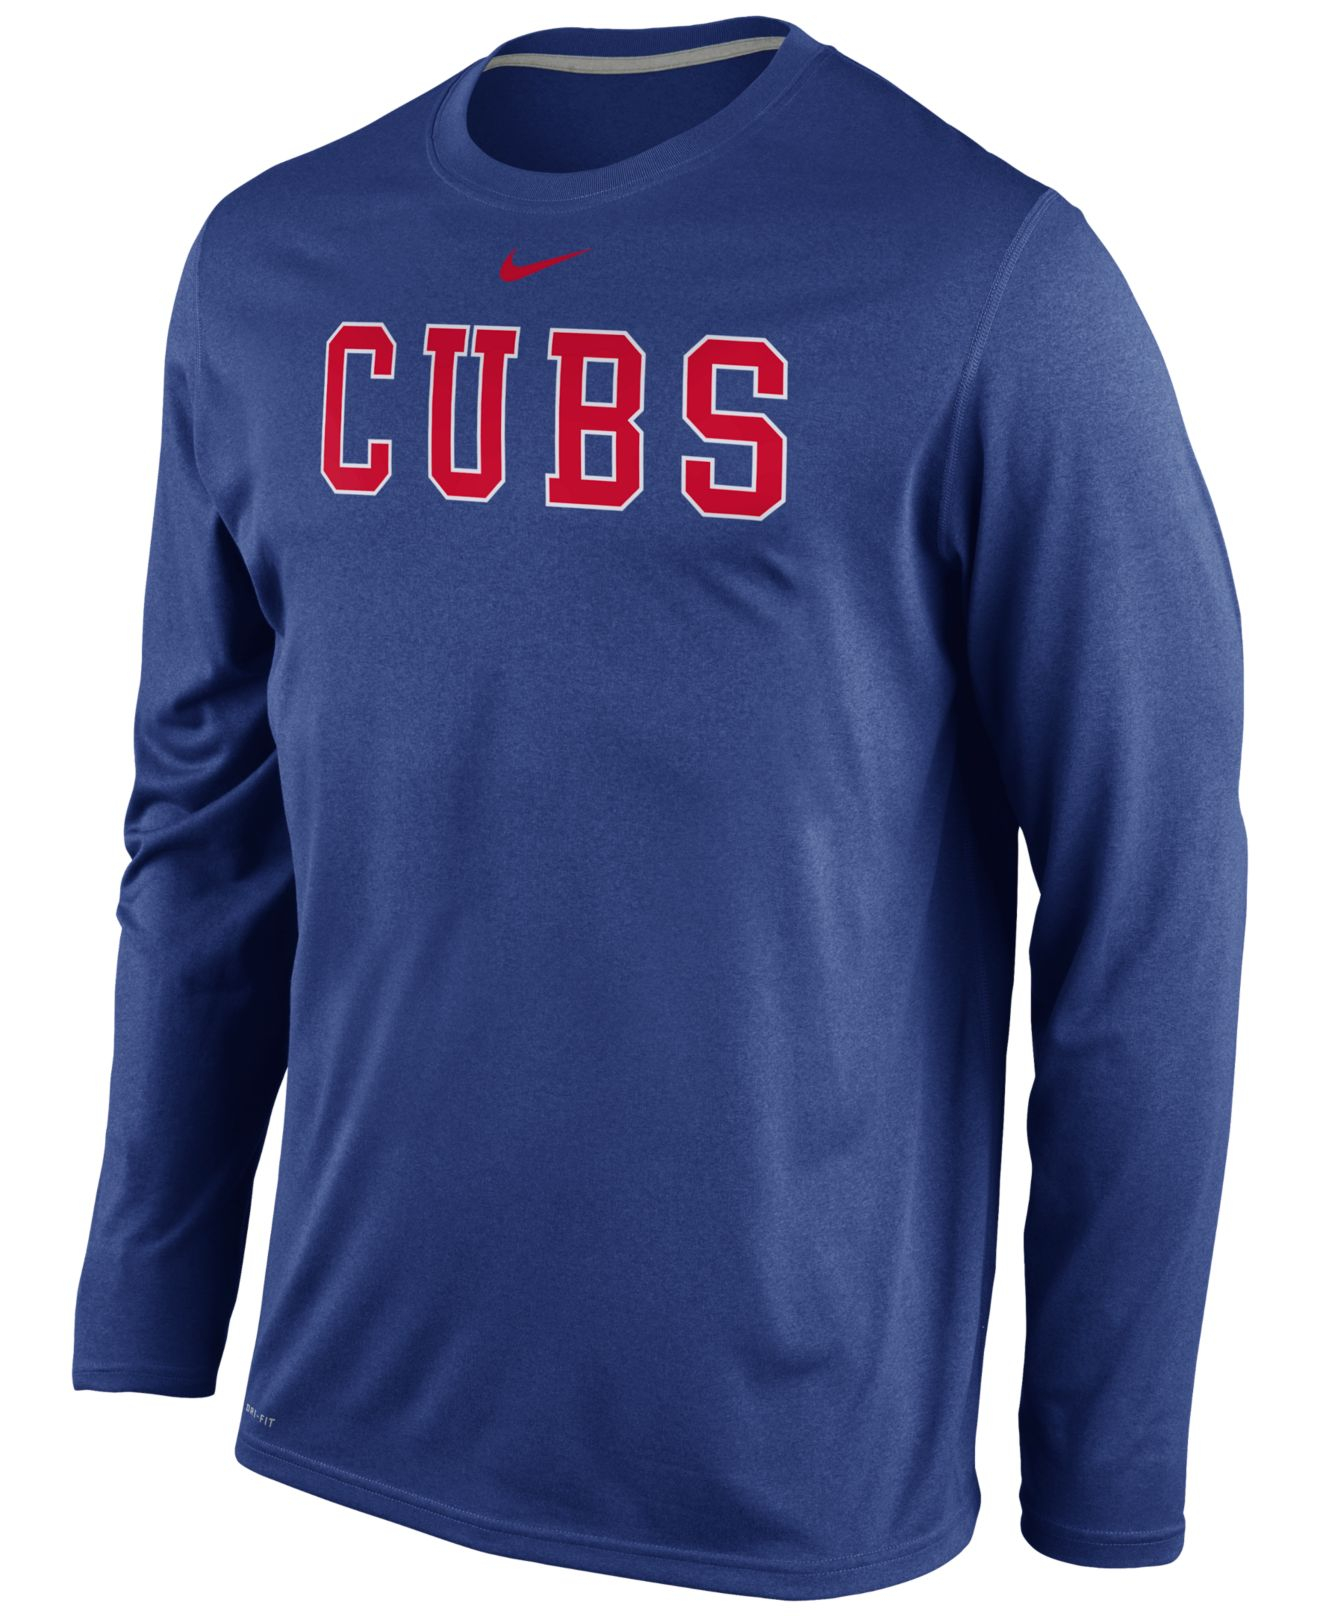 Lyst - Nike Men's Long-sleeve Chicago Cubs Legend T-shirt in Blue for Men